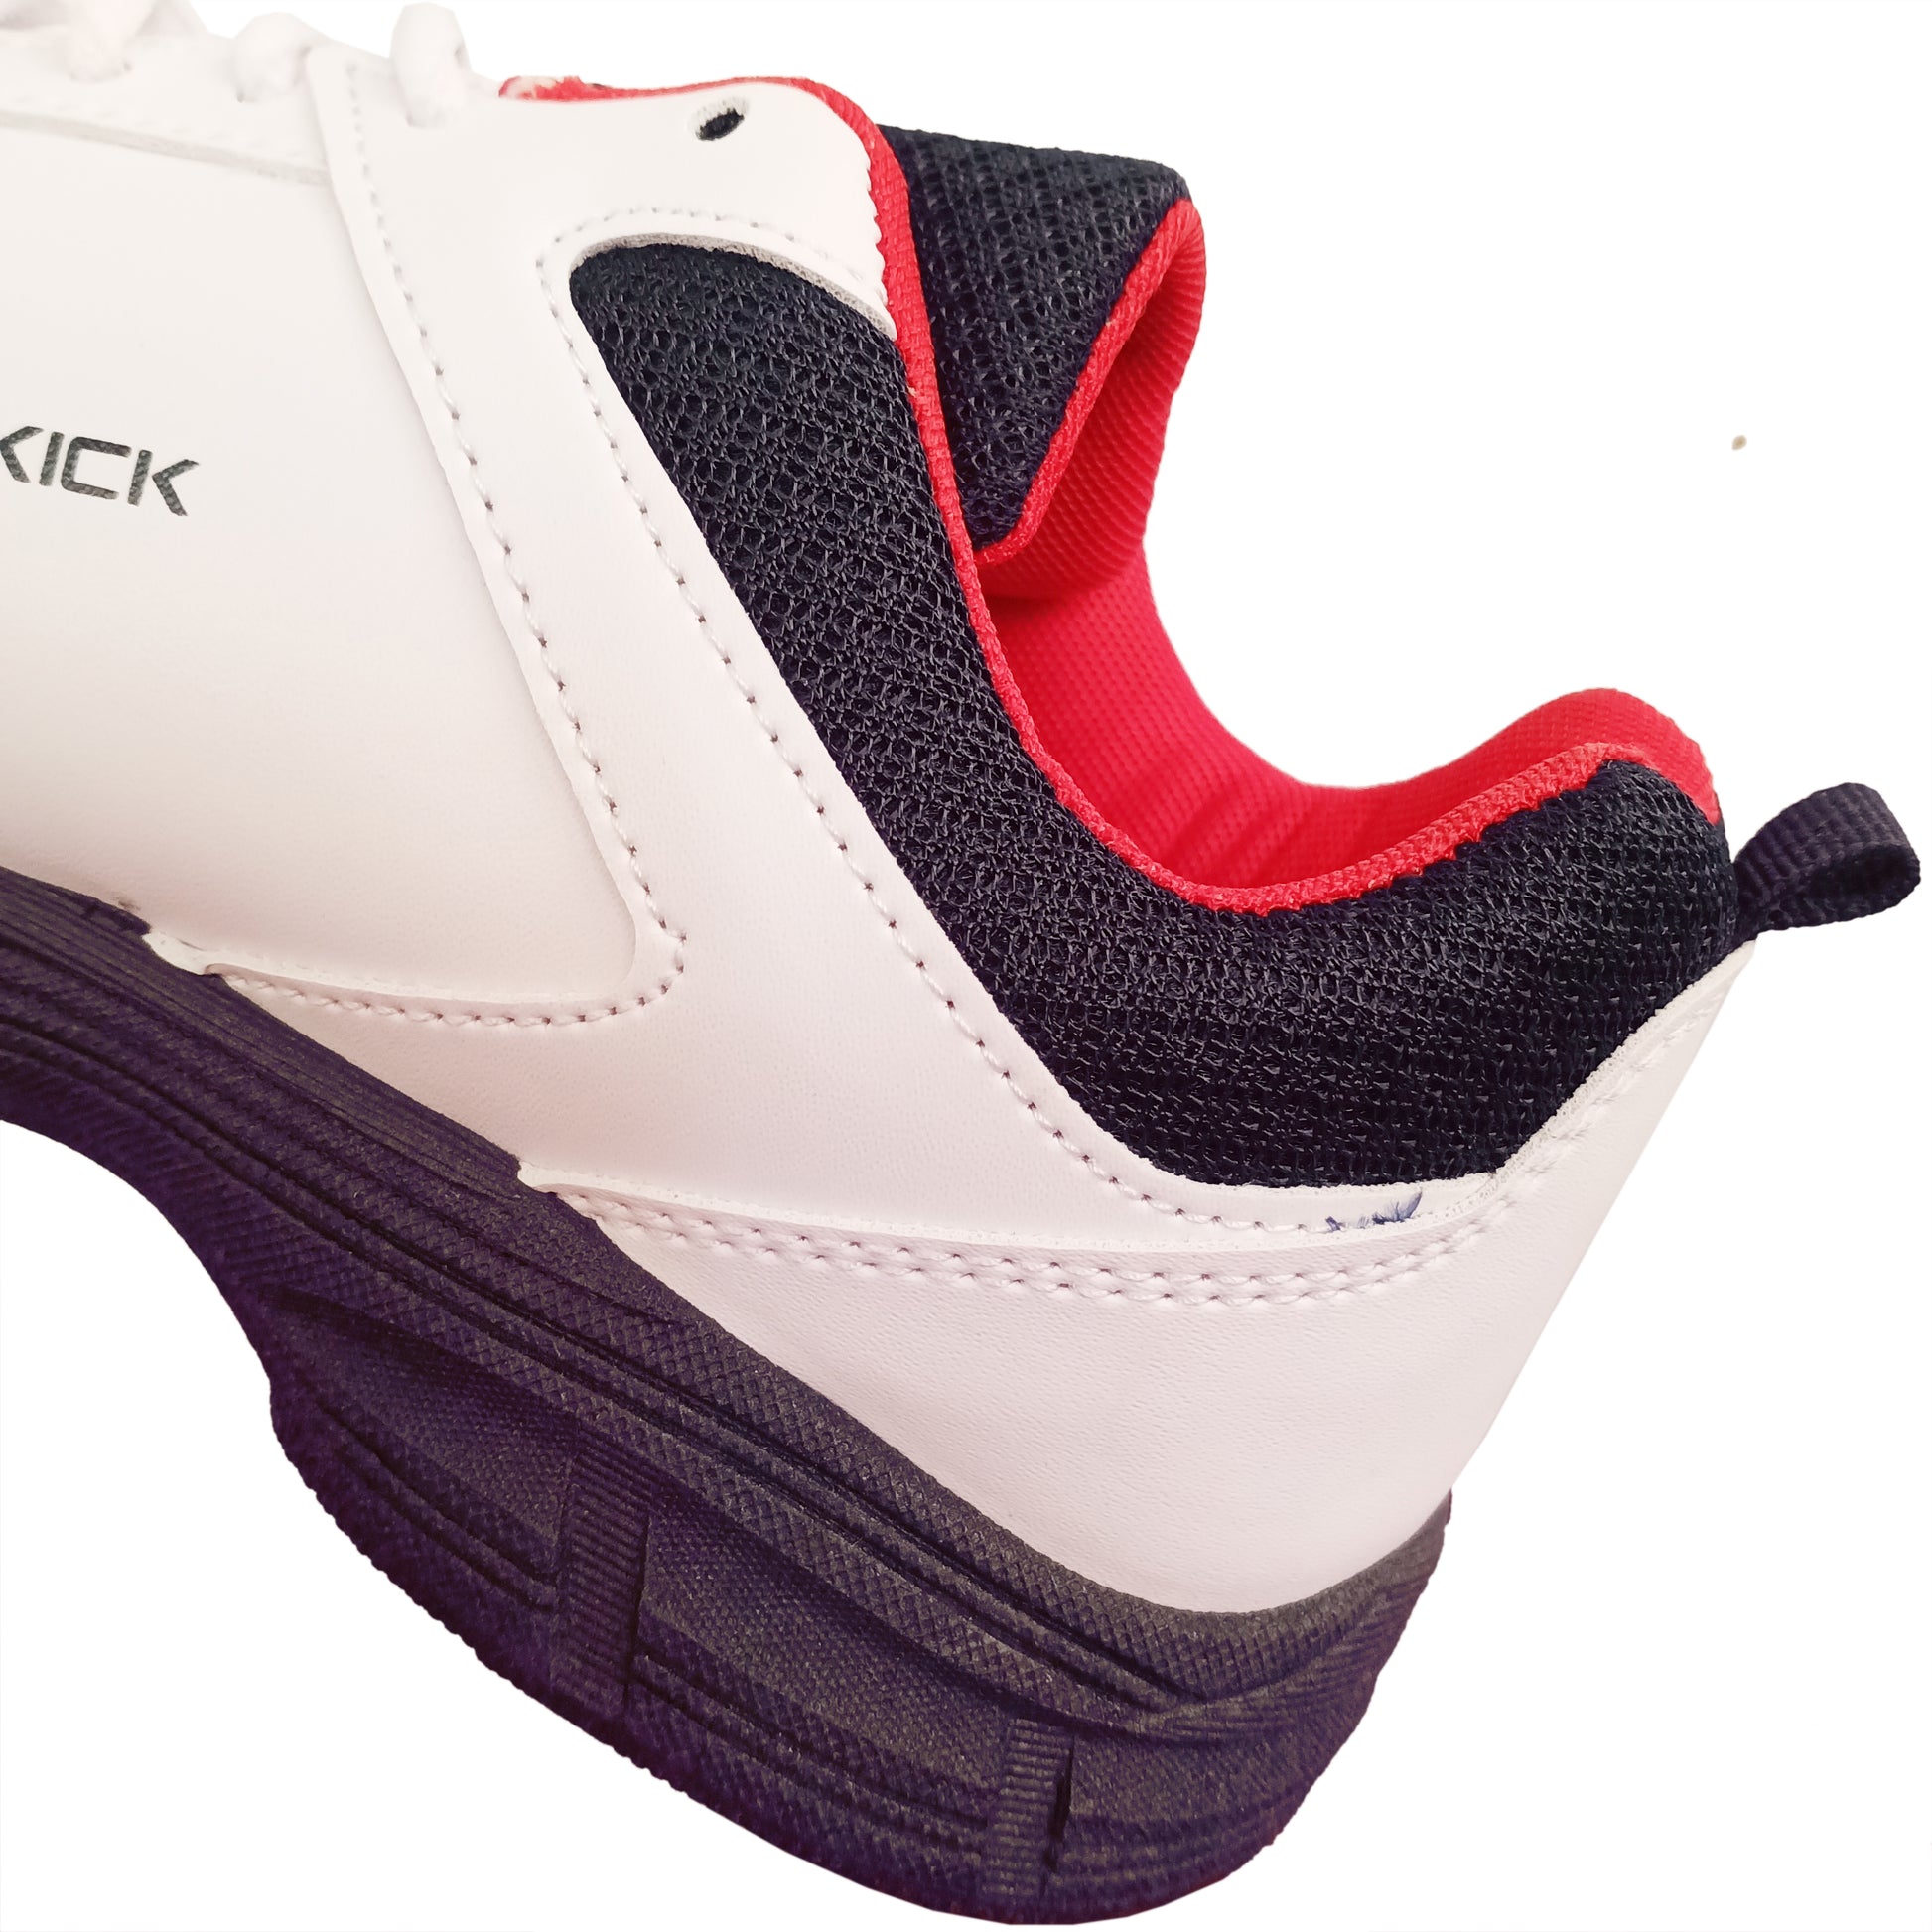 SG Prokick Challenger Cricket Shoe - Best Price online Prokicksports.com